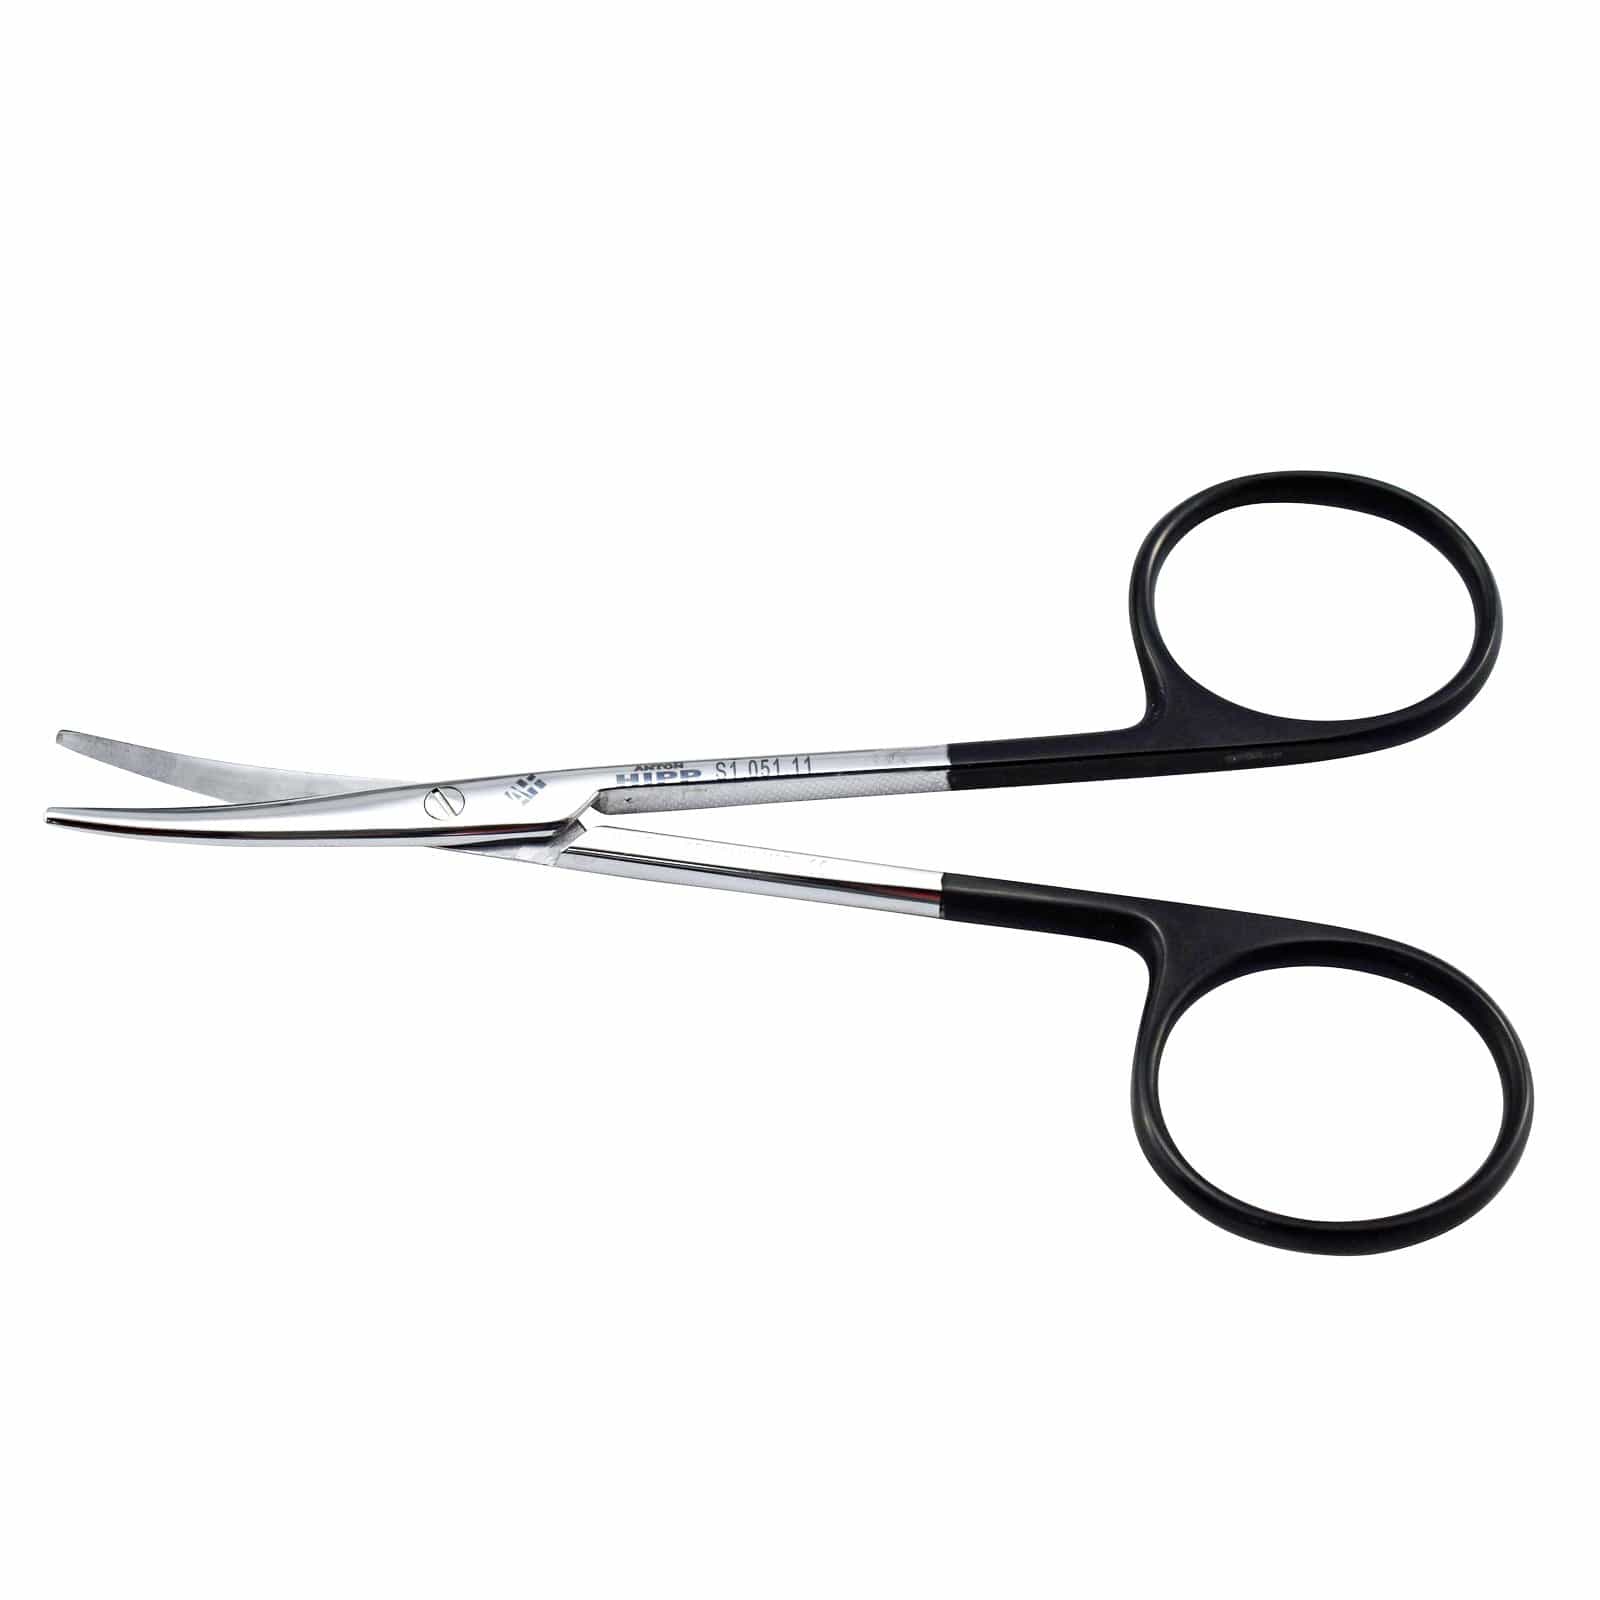 Hipp Surgical Instruments 11cm / Curved / Blunt/Blunt Hipp Metzenbaum Scissors